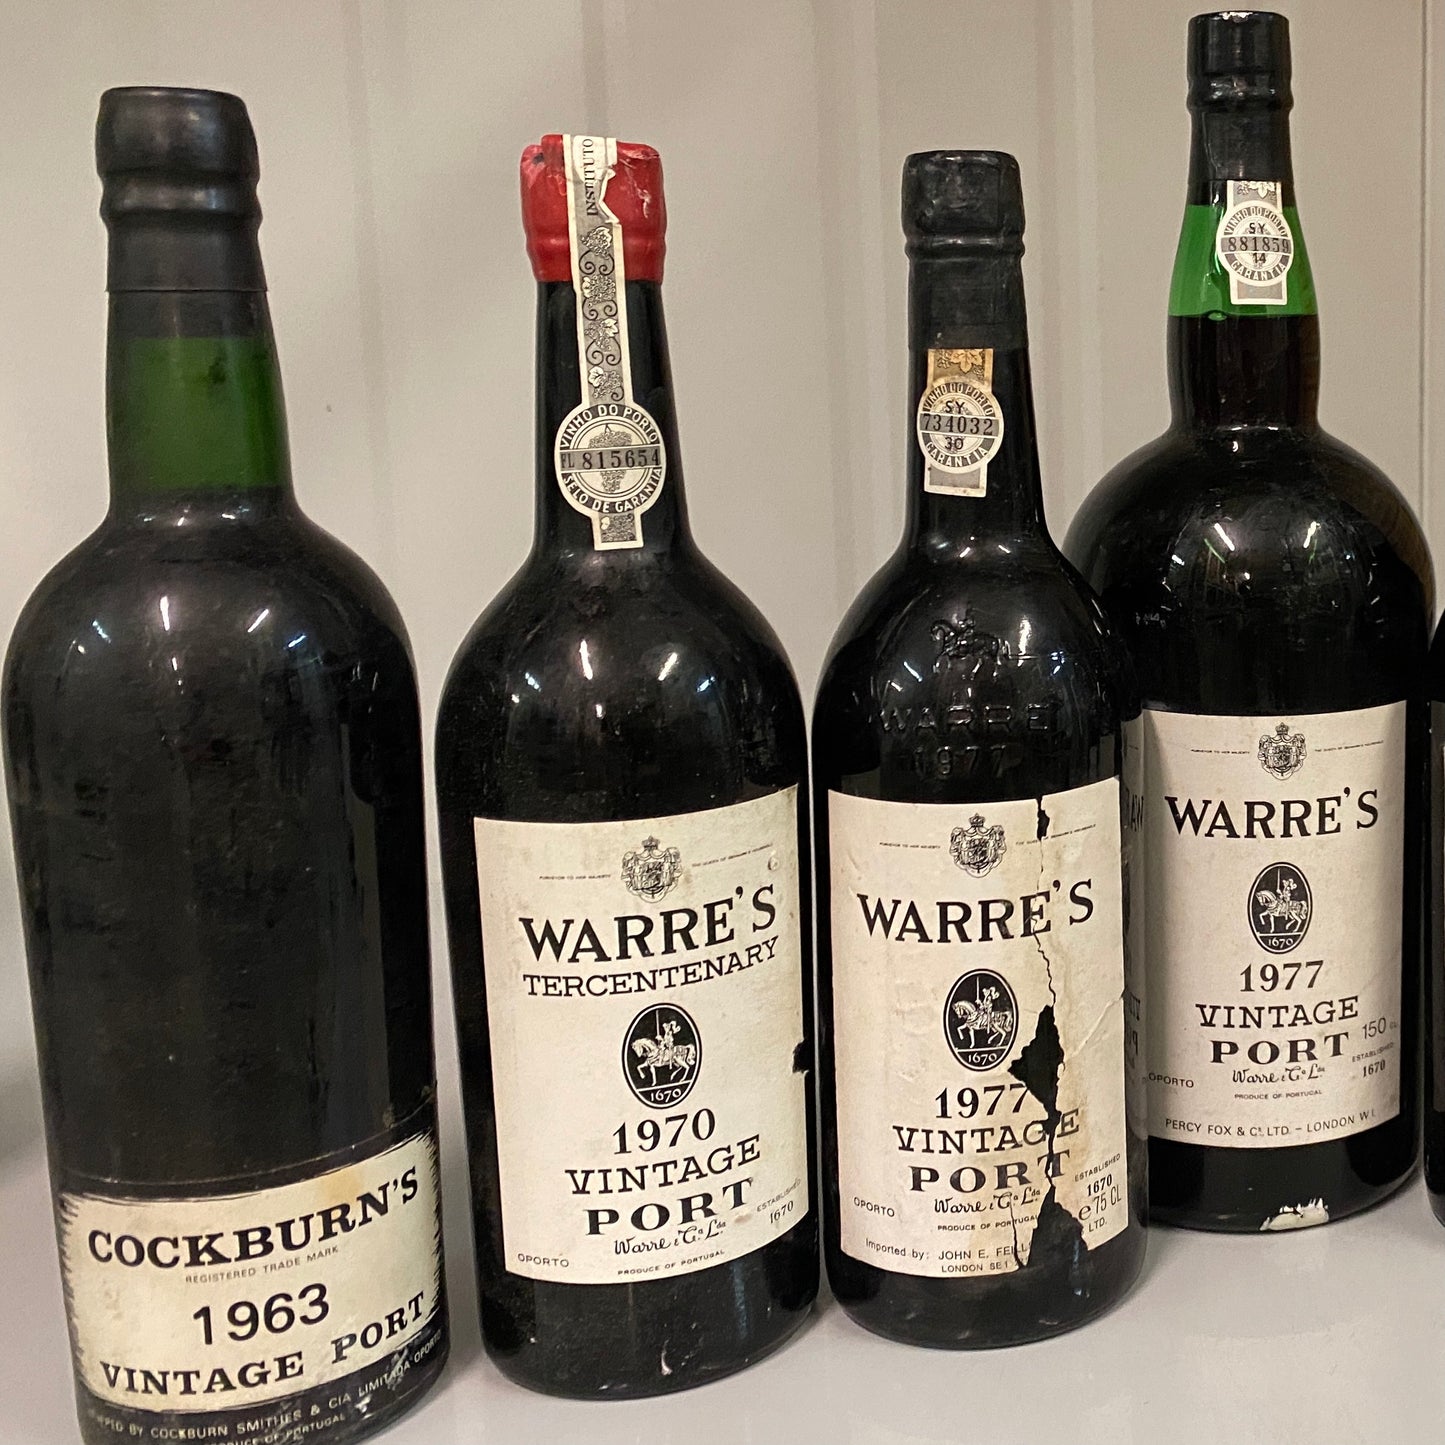 1970 Warre's Porto Vintage, Portugal, 750 ml